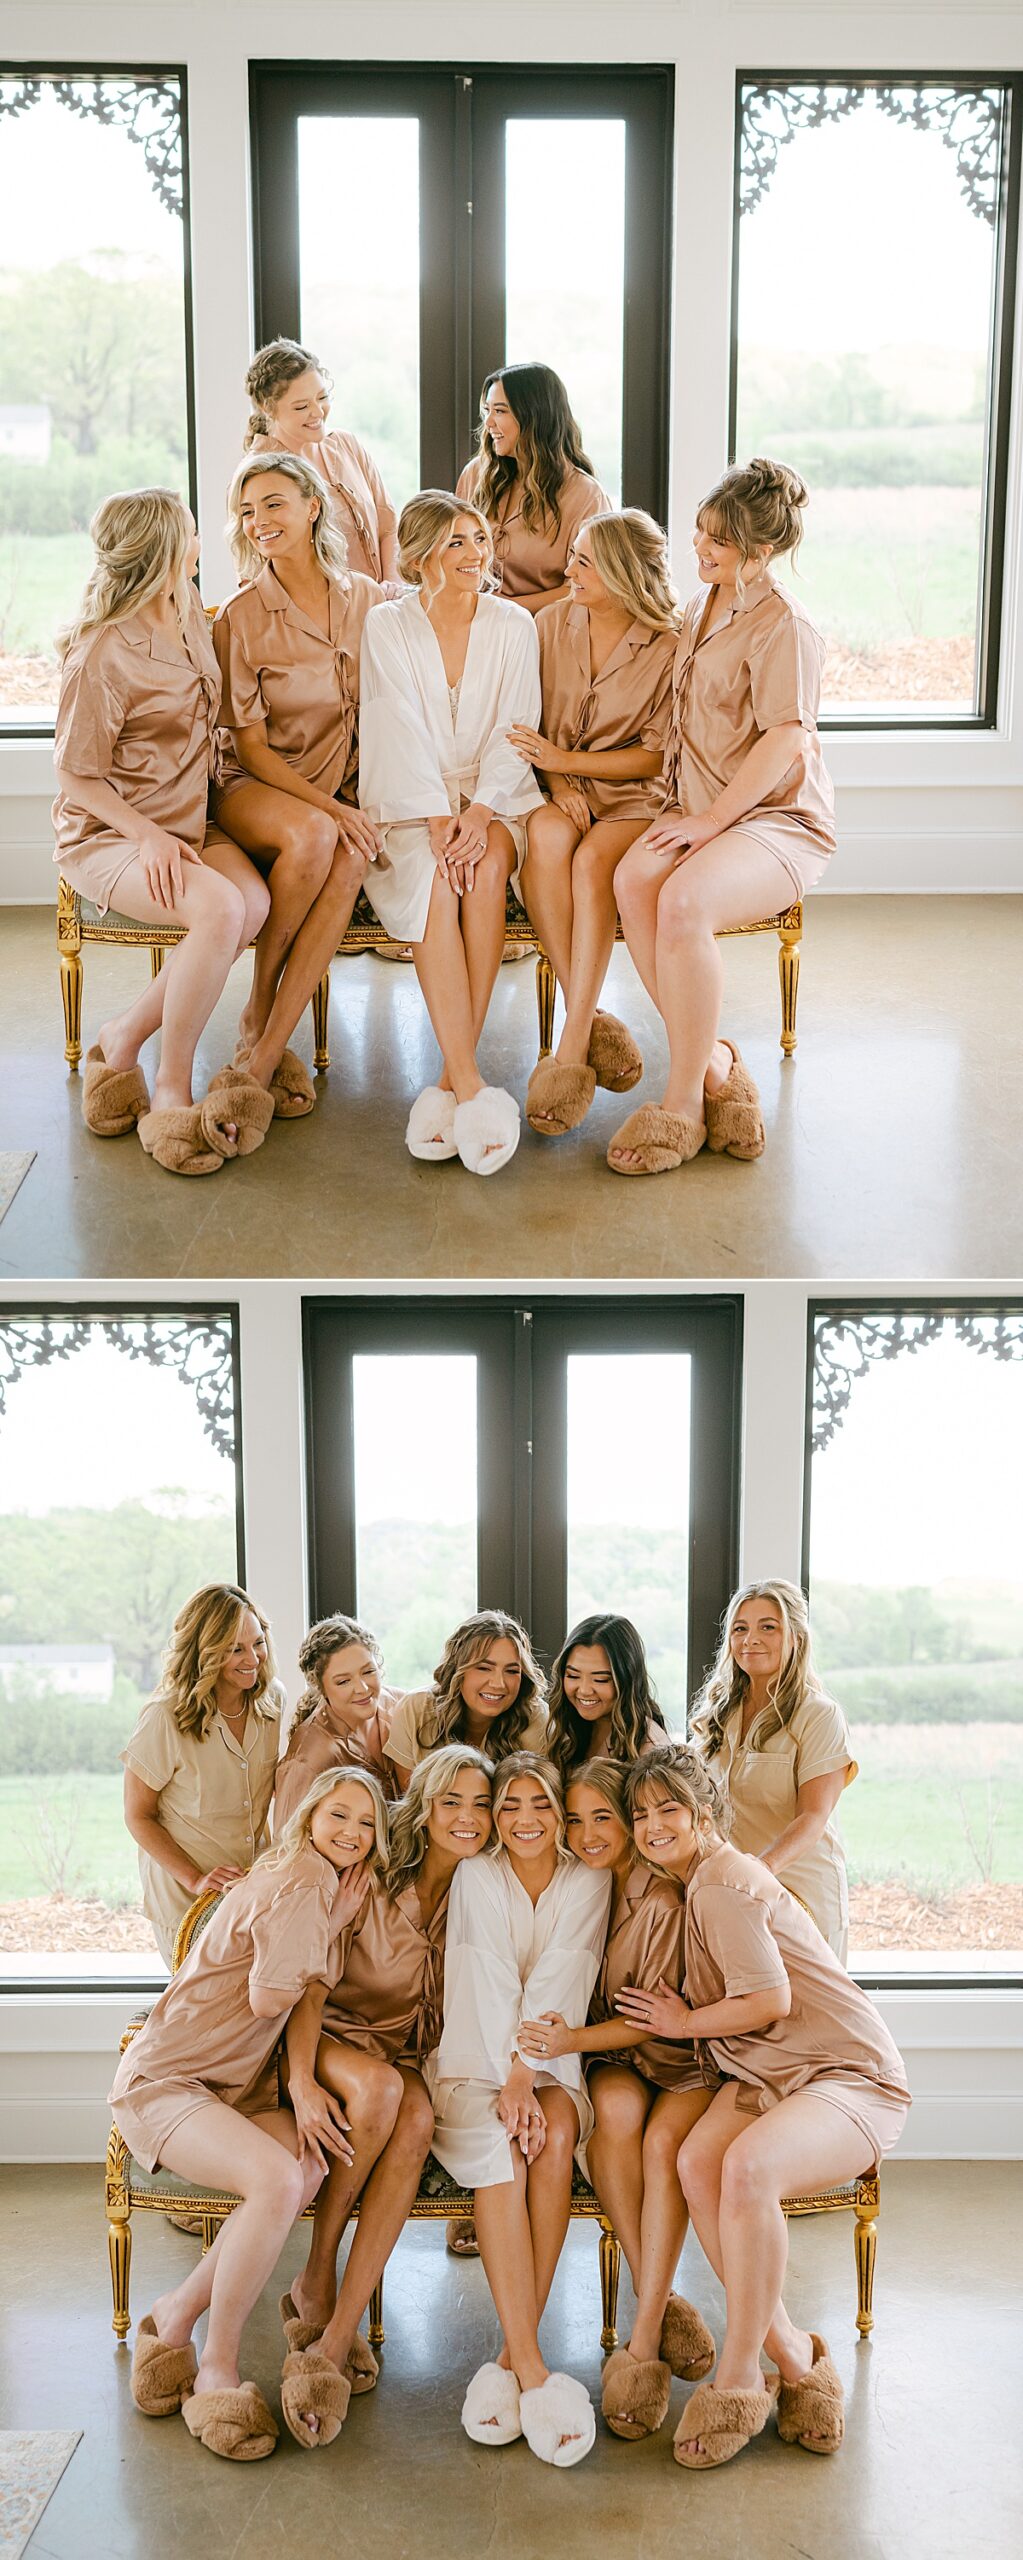 Bride and bridesmaids in matching white and caramel satin pajamas.  